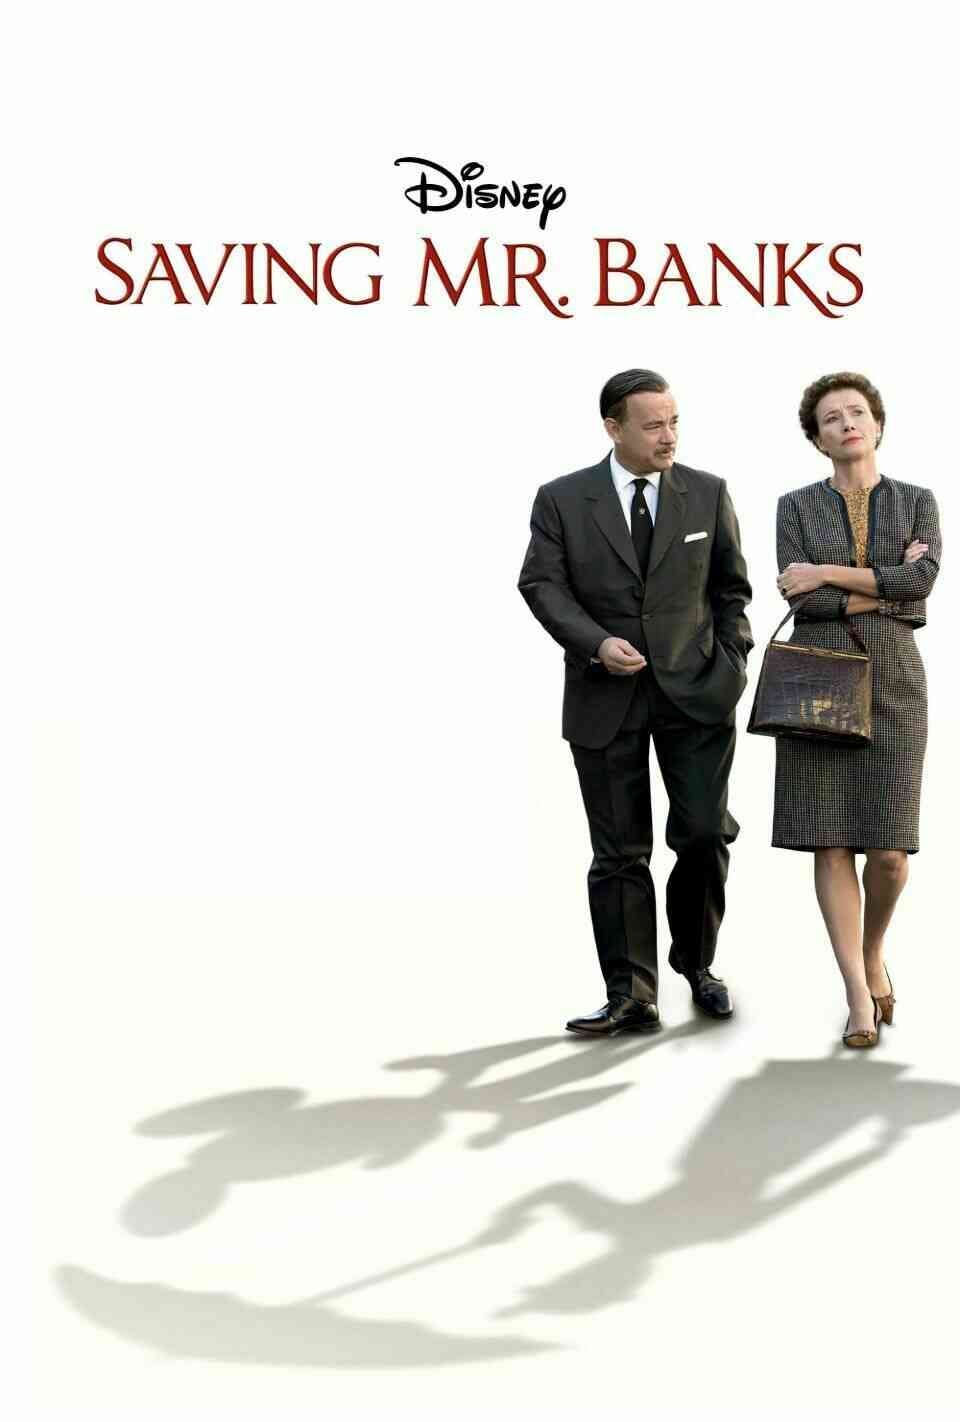 Read Saving Mr. Banks screenplay (poster)